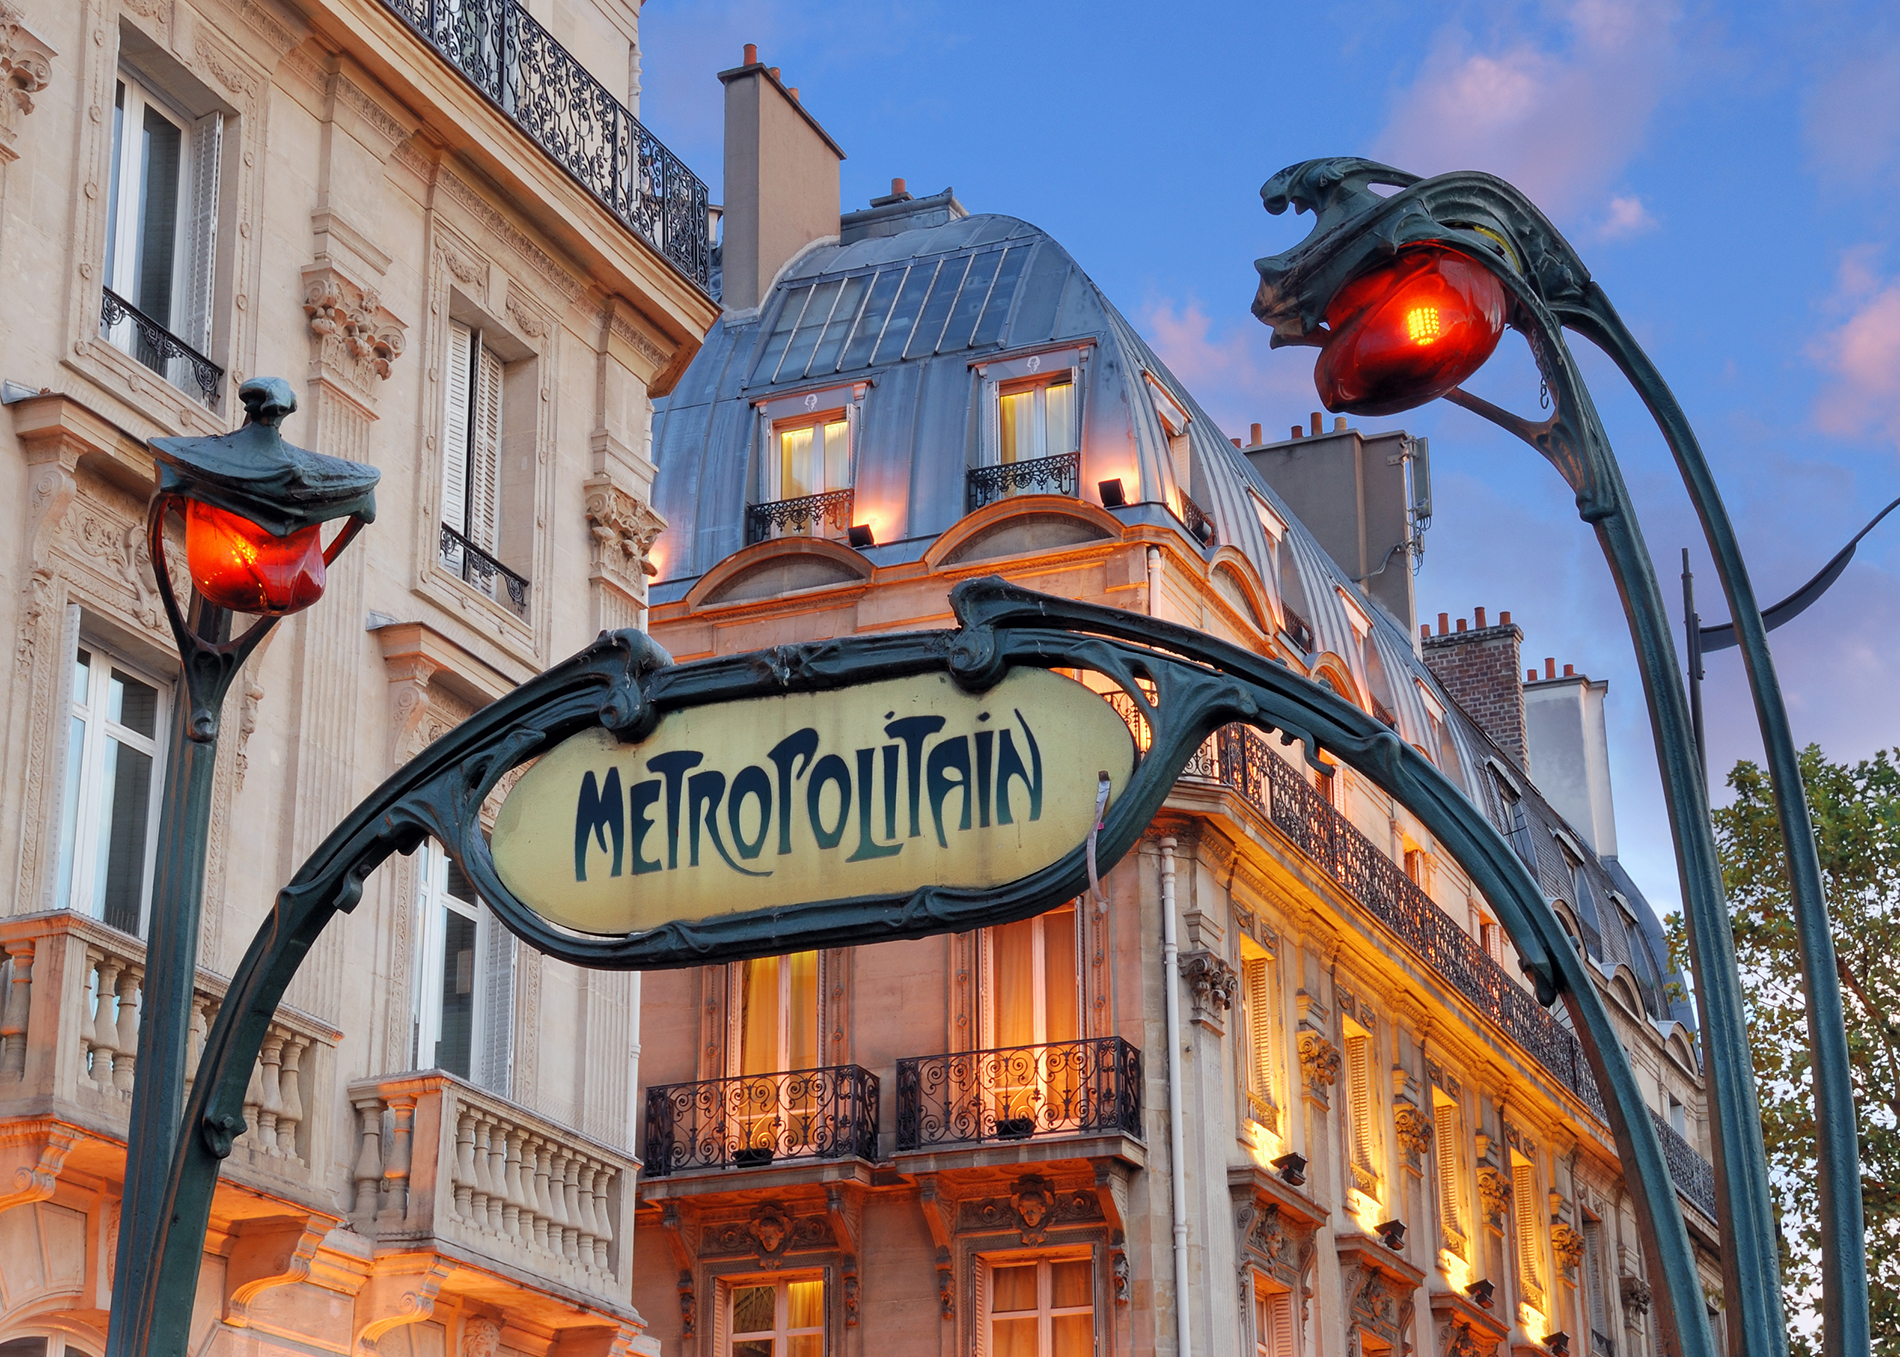 paris metropolitain sign